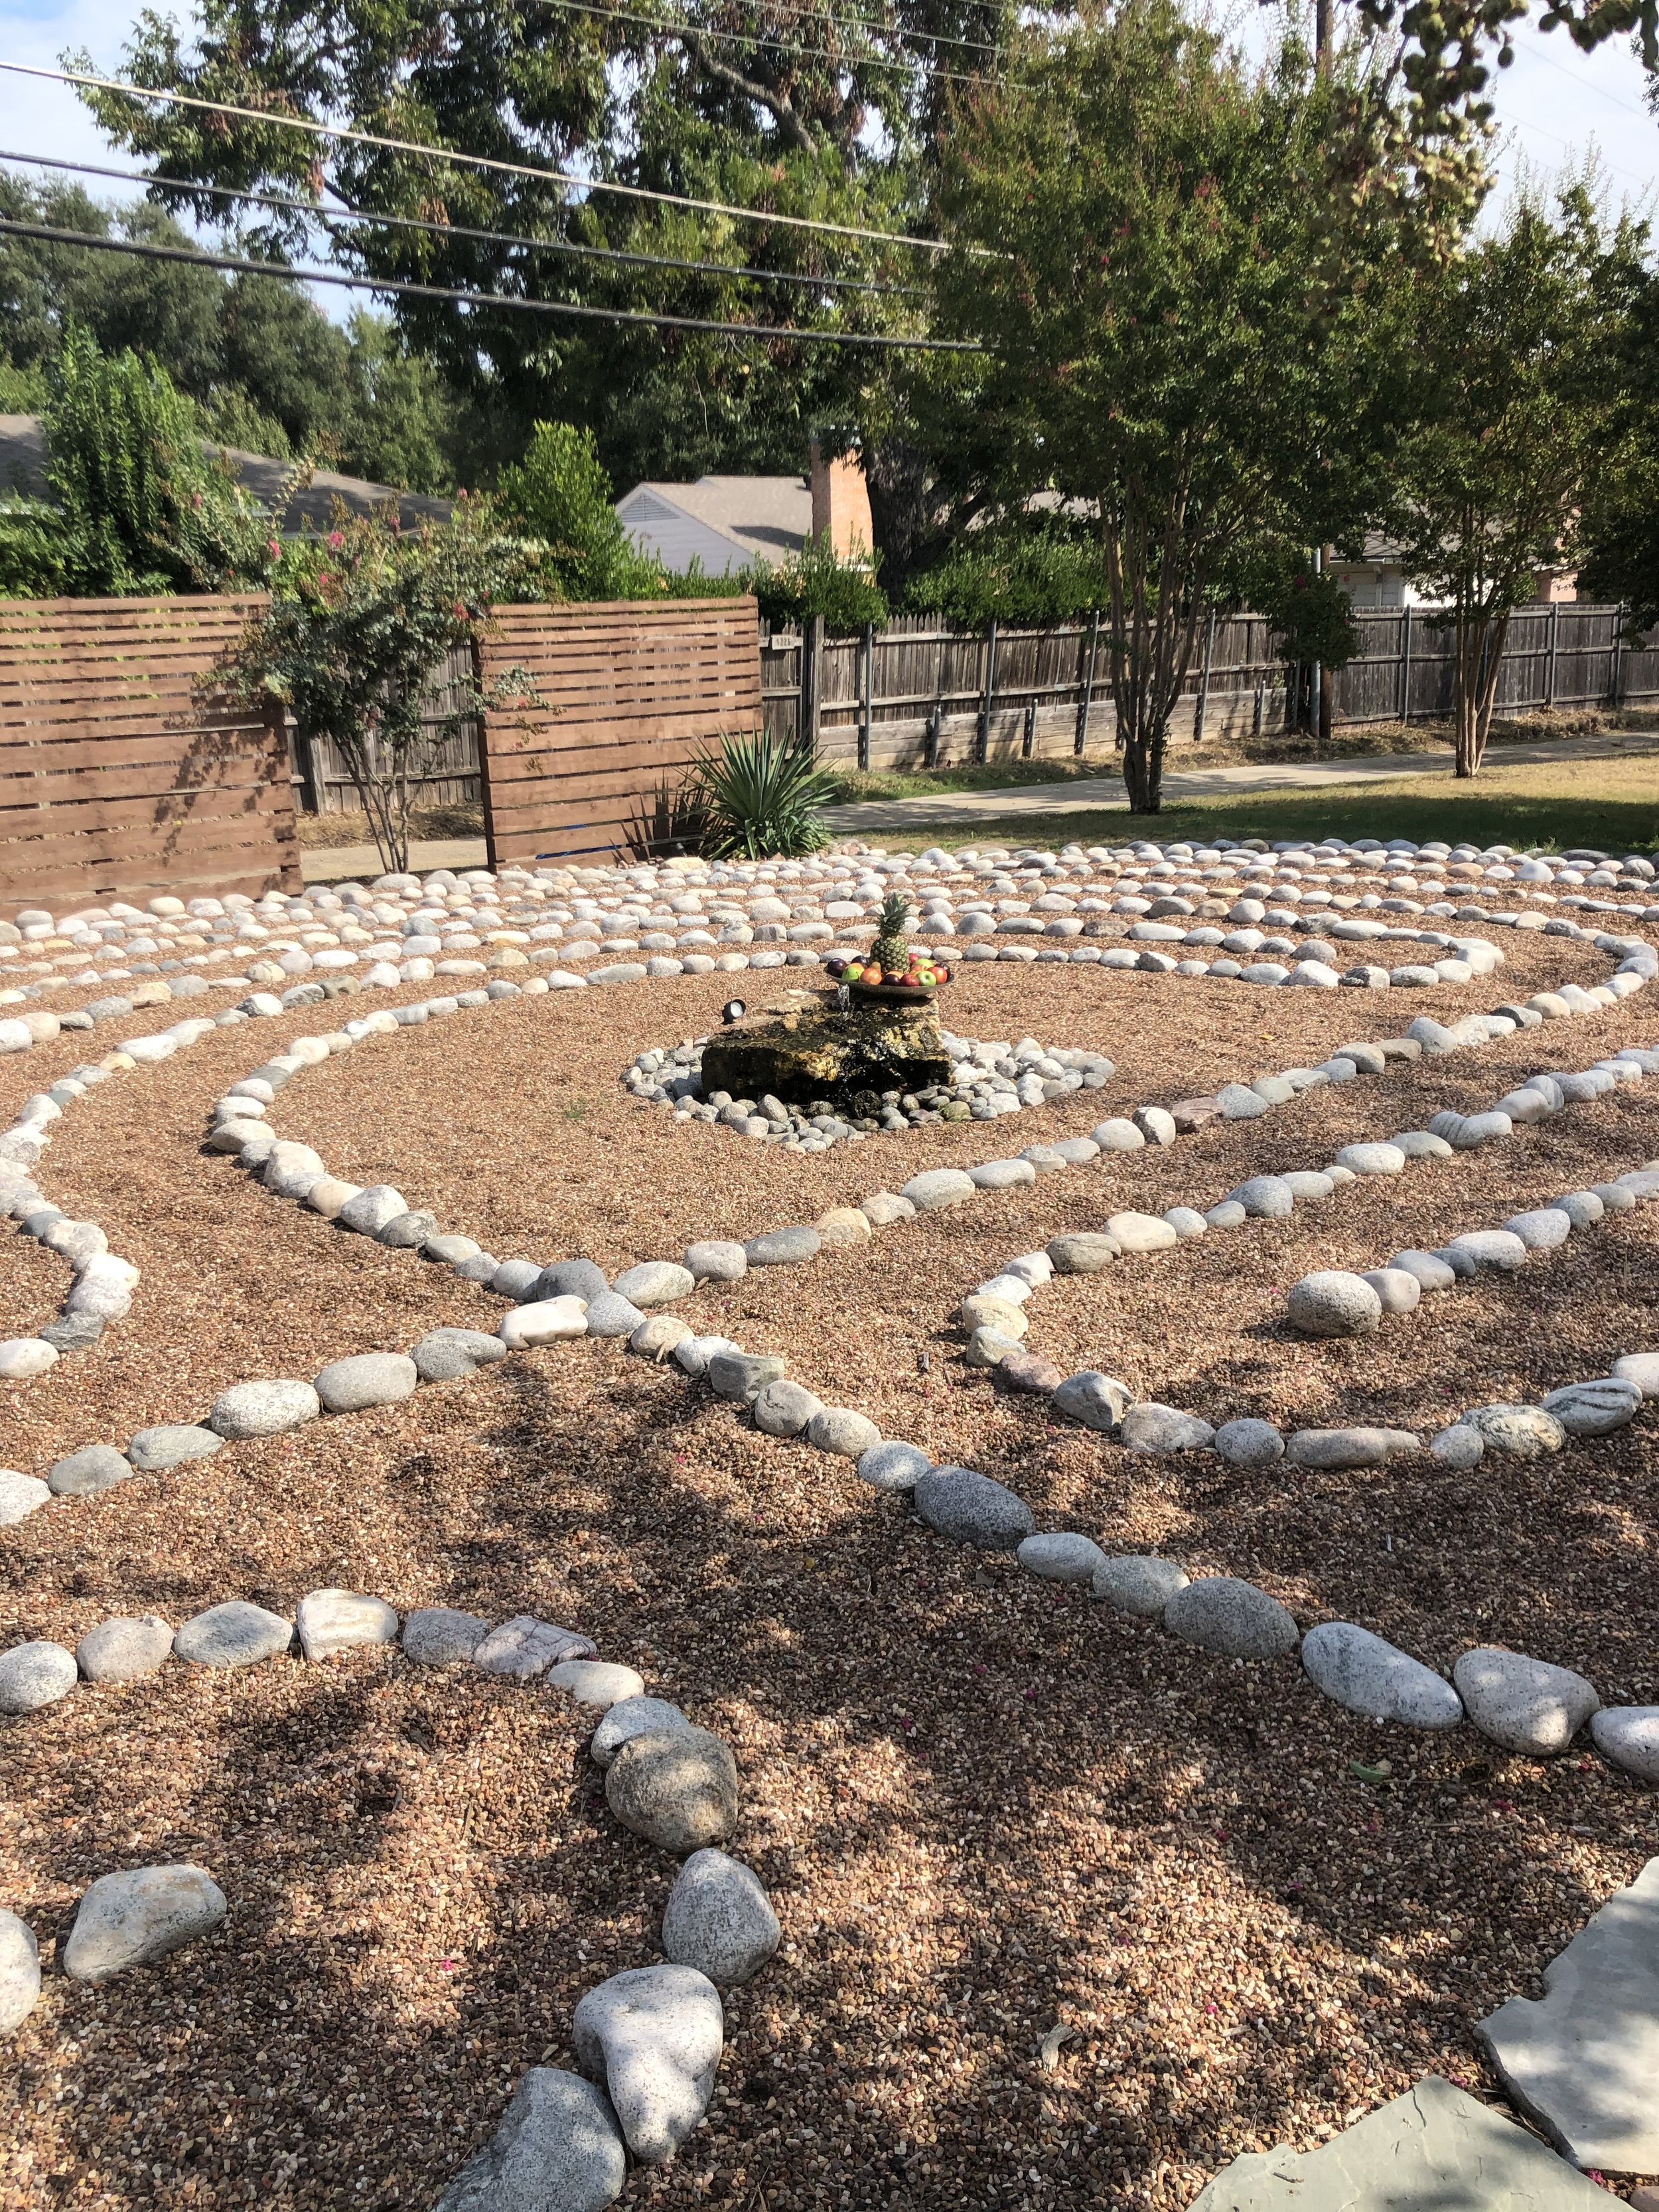 A Pilgrim's Labyrinth